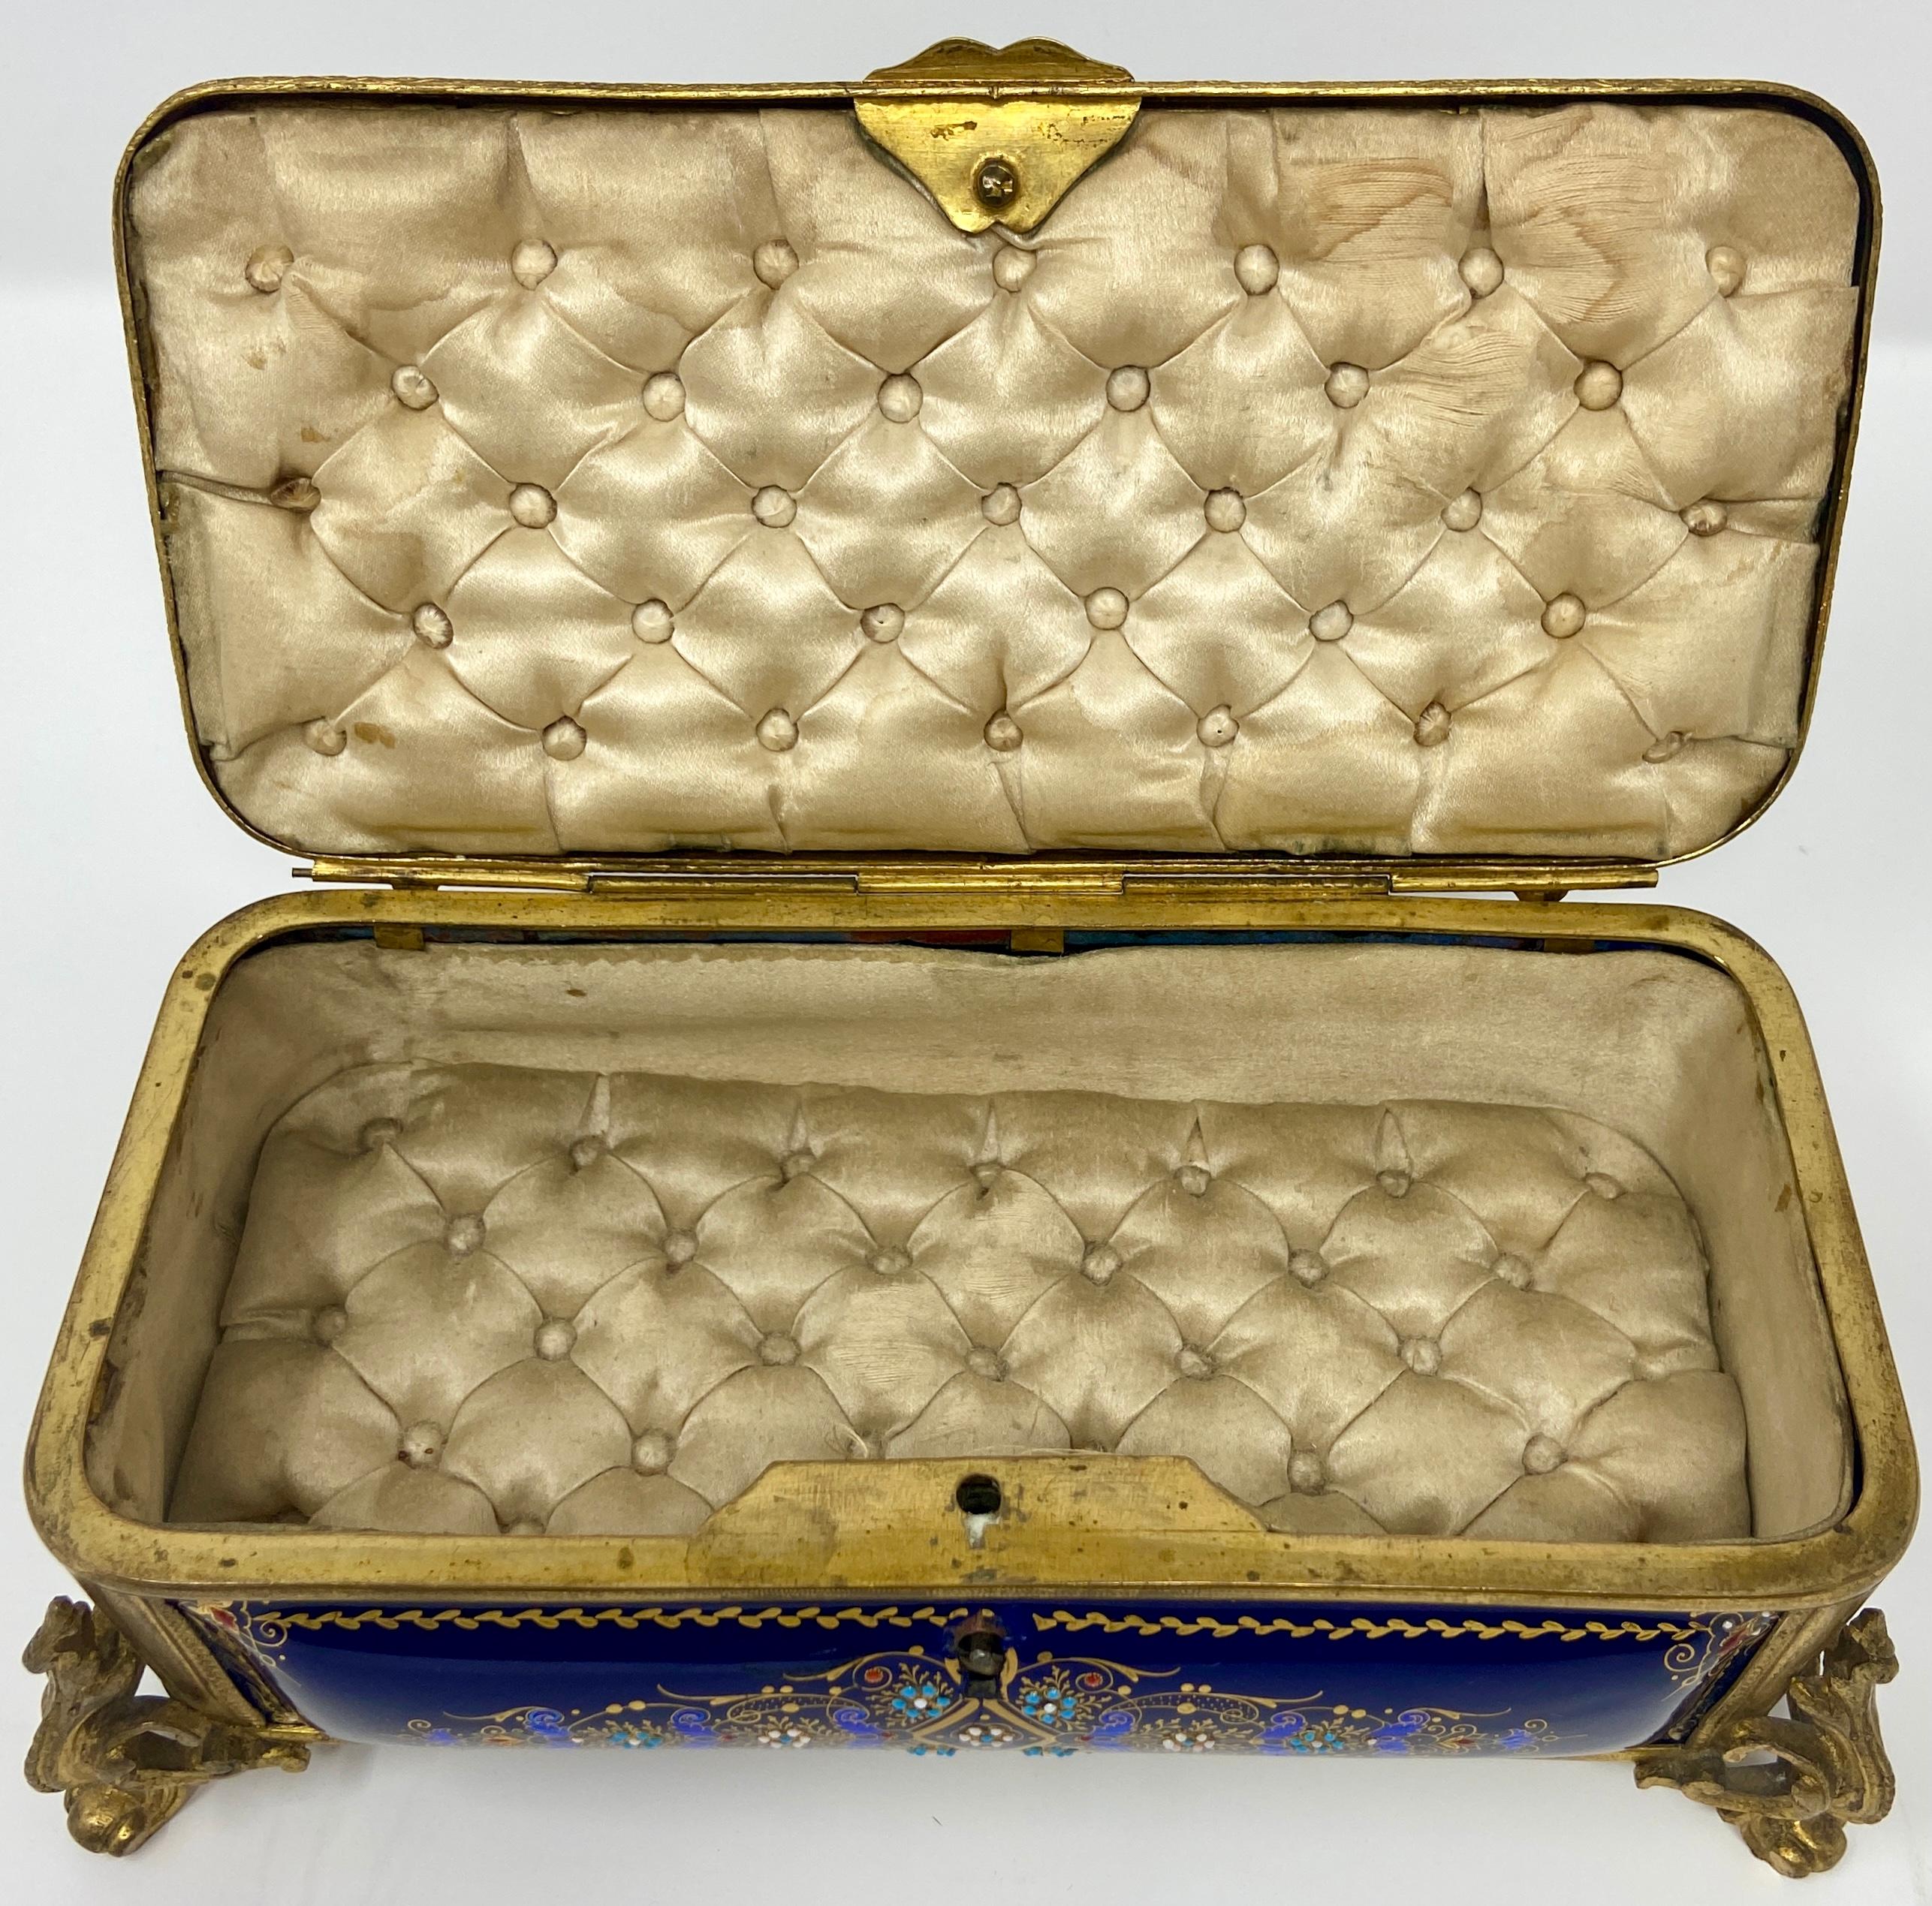 Belle Époque Antique French Gold Bronze and Blue Enameled Porcelain Jewel Box, Circa 1880s.